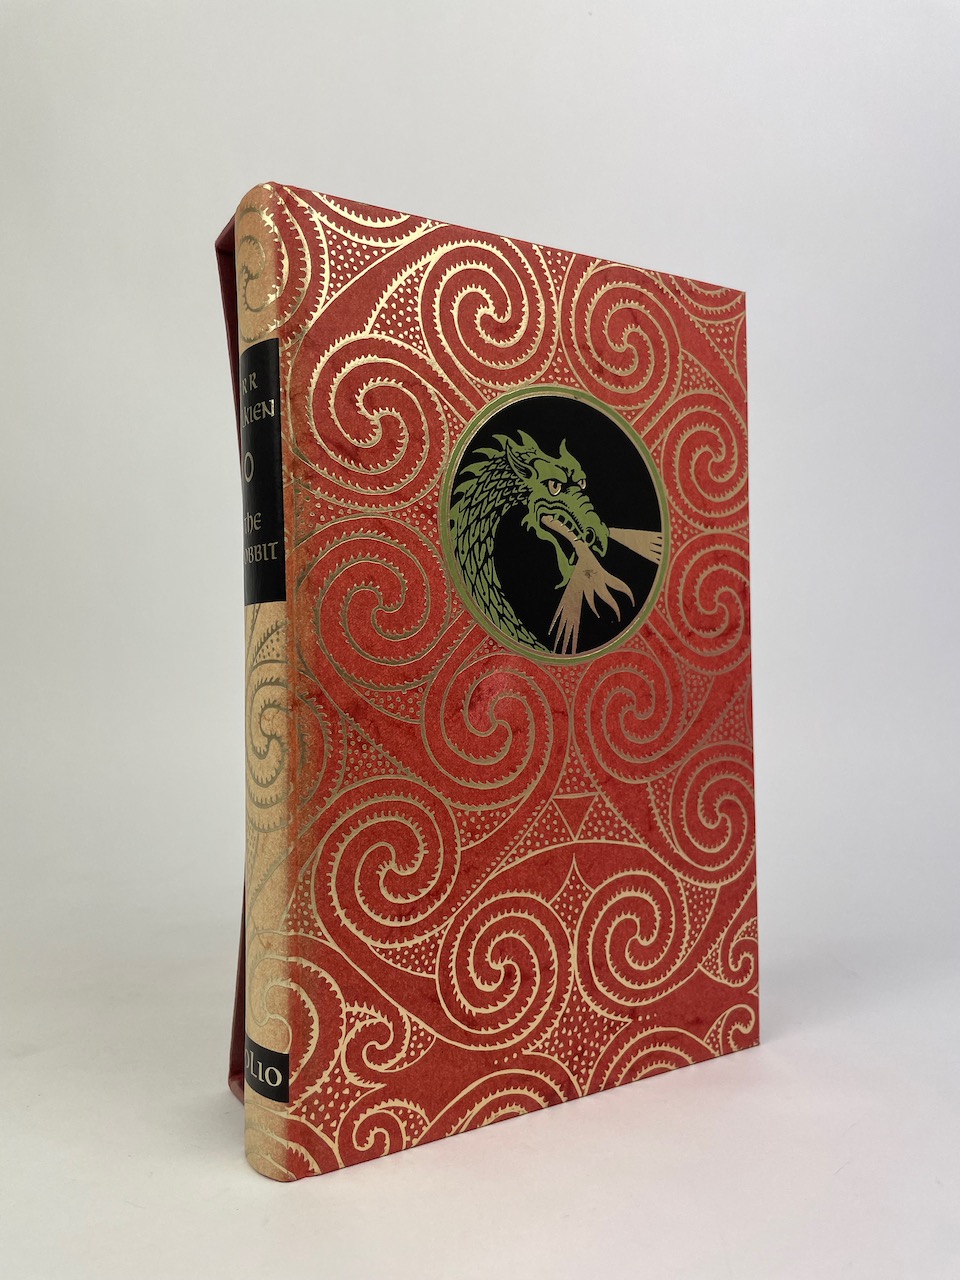 he Hobbit by J.R.R. Tolkien – 3rd impression Folio Society from 1999 - Near Fine 4